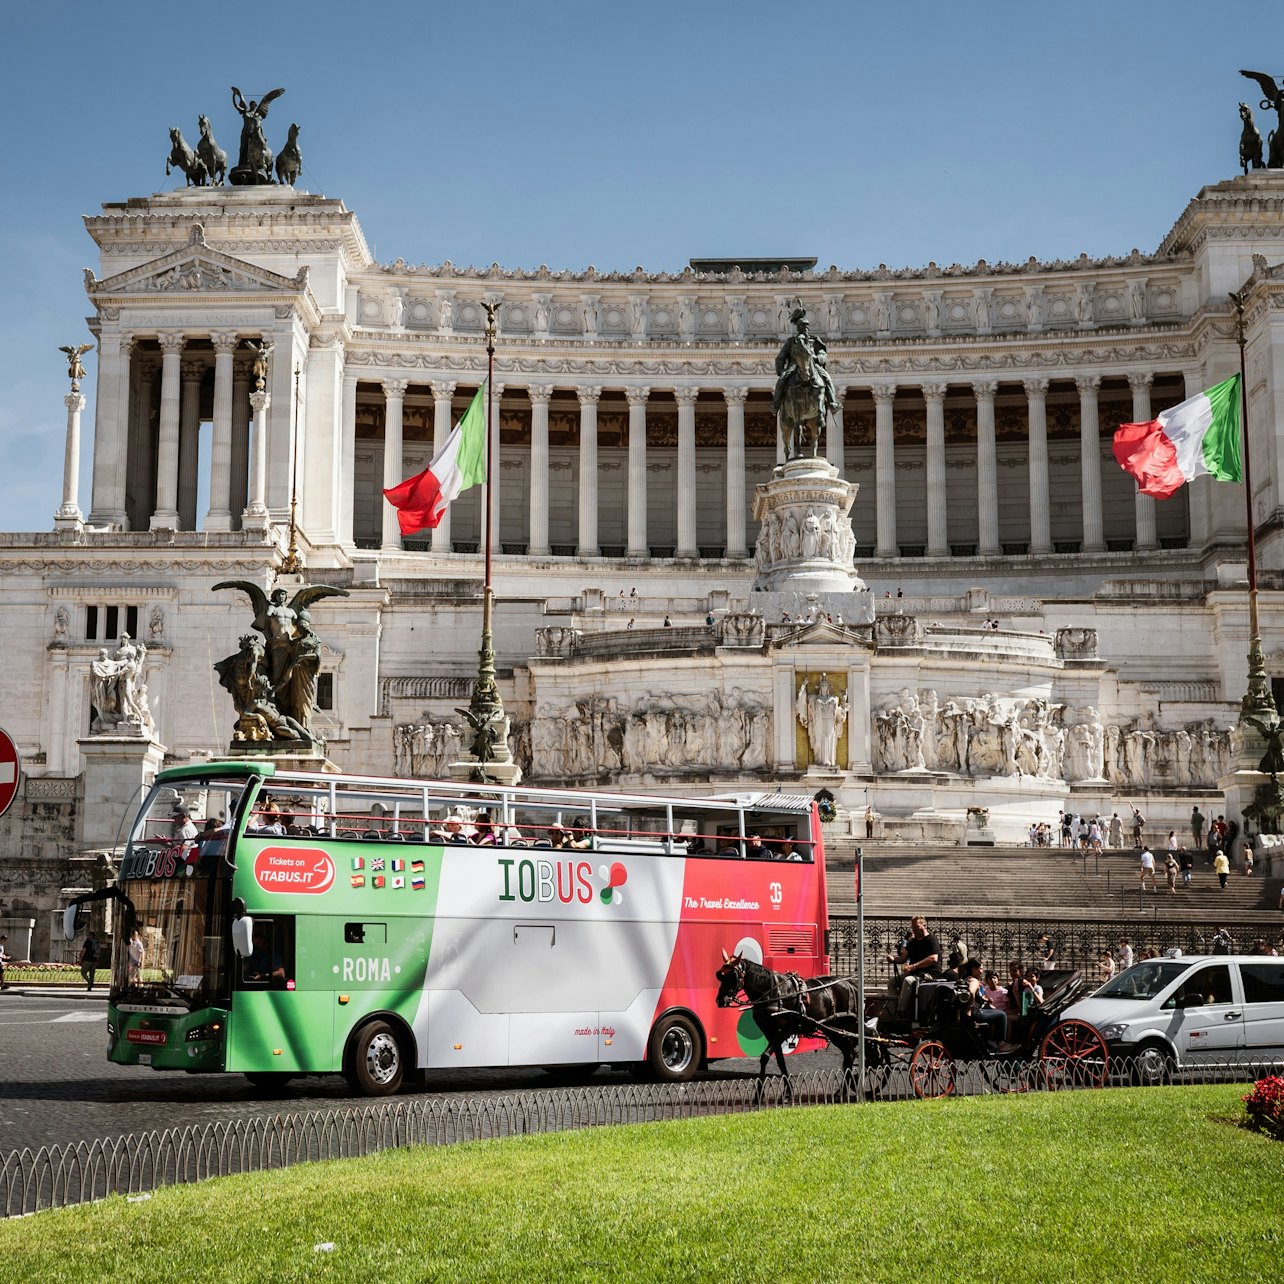 IOBUS Roma - Bus Hop-on Hop-off + Outlet di Castel Romano - Alloggi in Roma